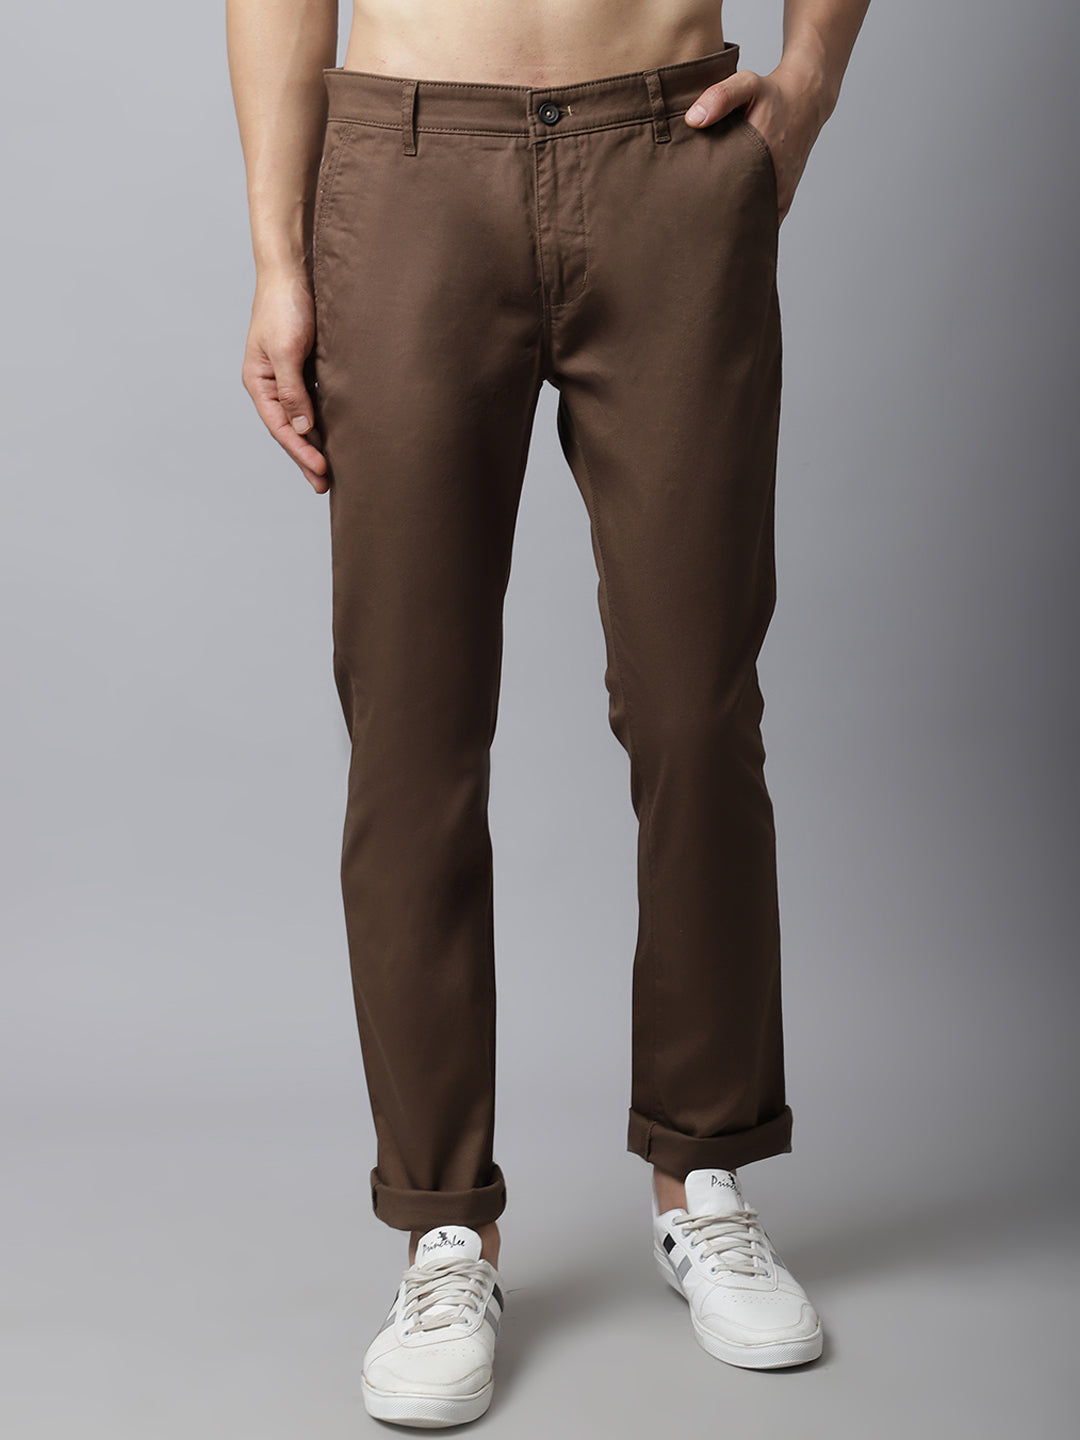 Buy Cantabil Men Khaki Cotton Regular Fit Casual Trouser  (MTRC00008_Khaki_30) at Amazon.in